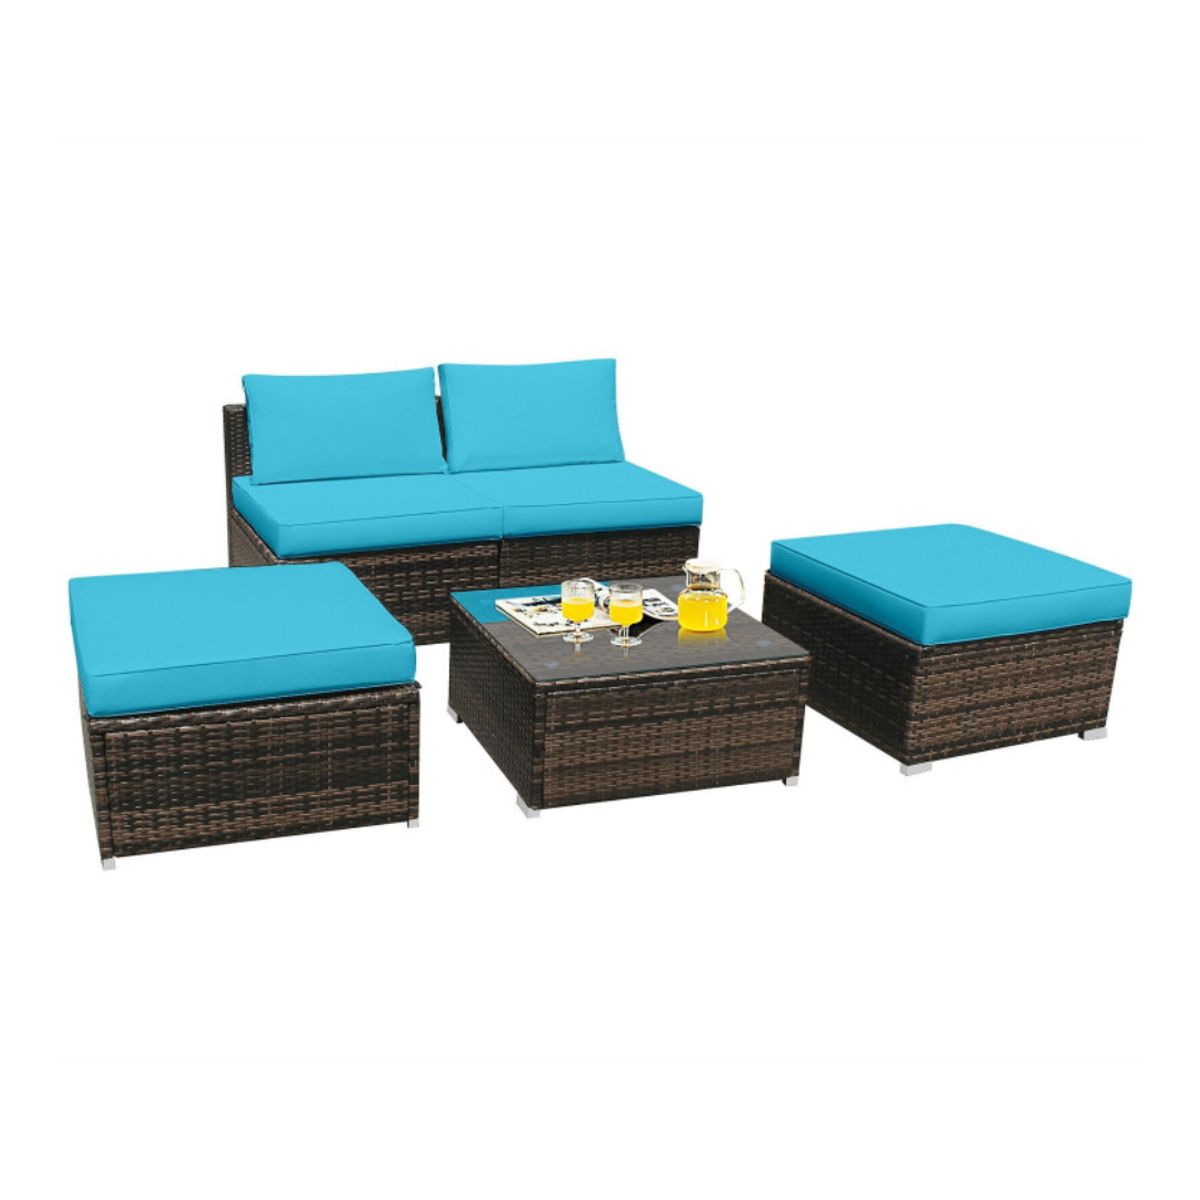 Photos - Garden Furniture Costway 4-Piece Rattan Wicker Furniture Set - Turquoise HW66745TU+ 